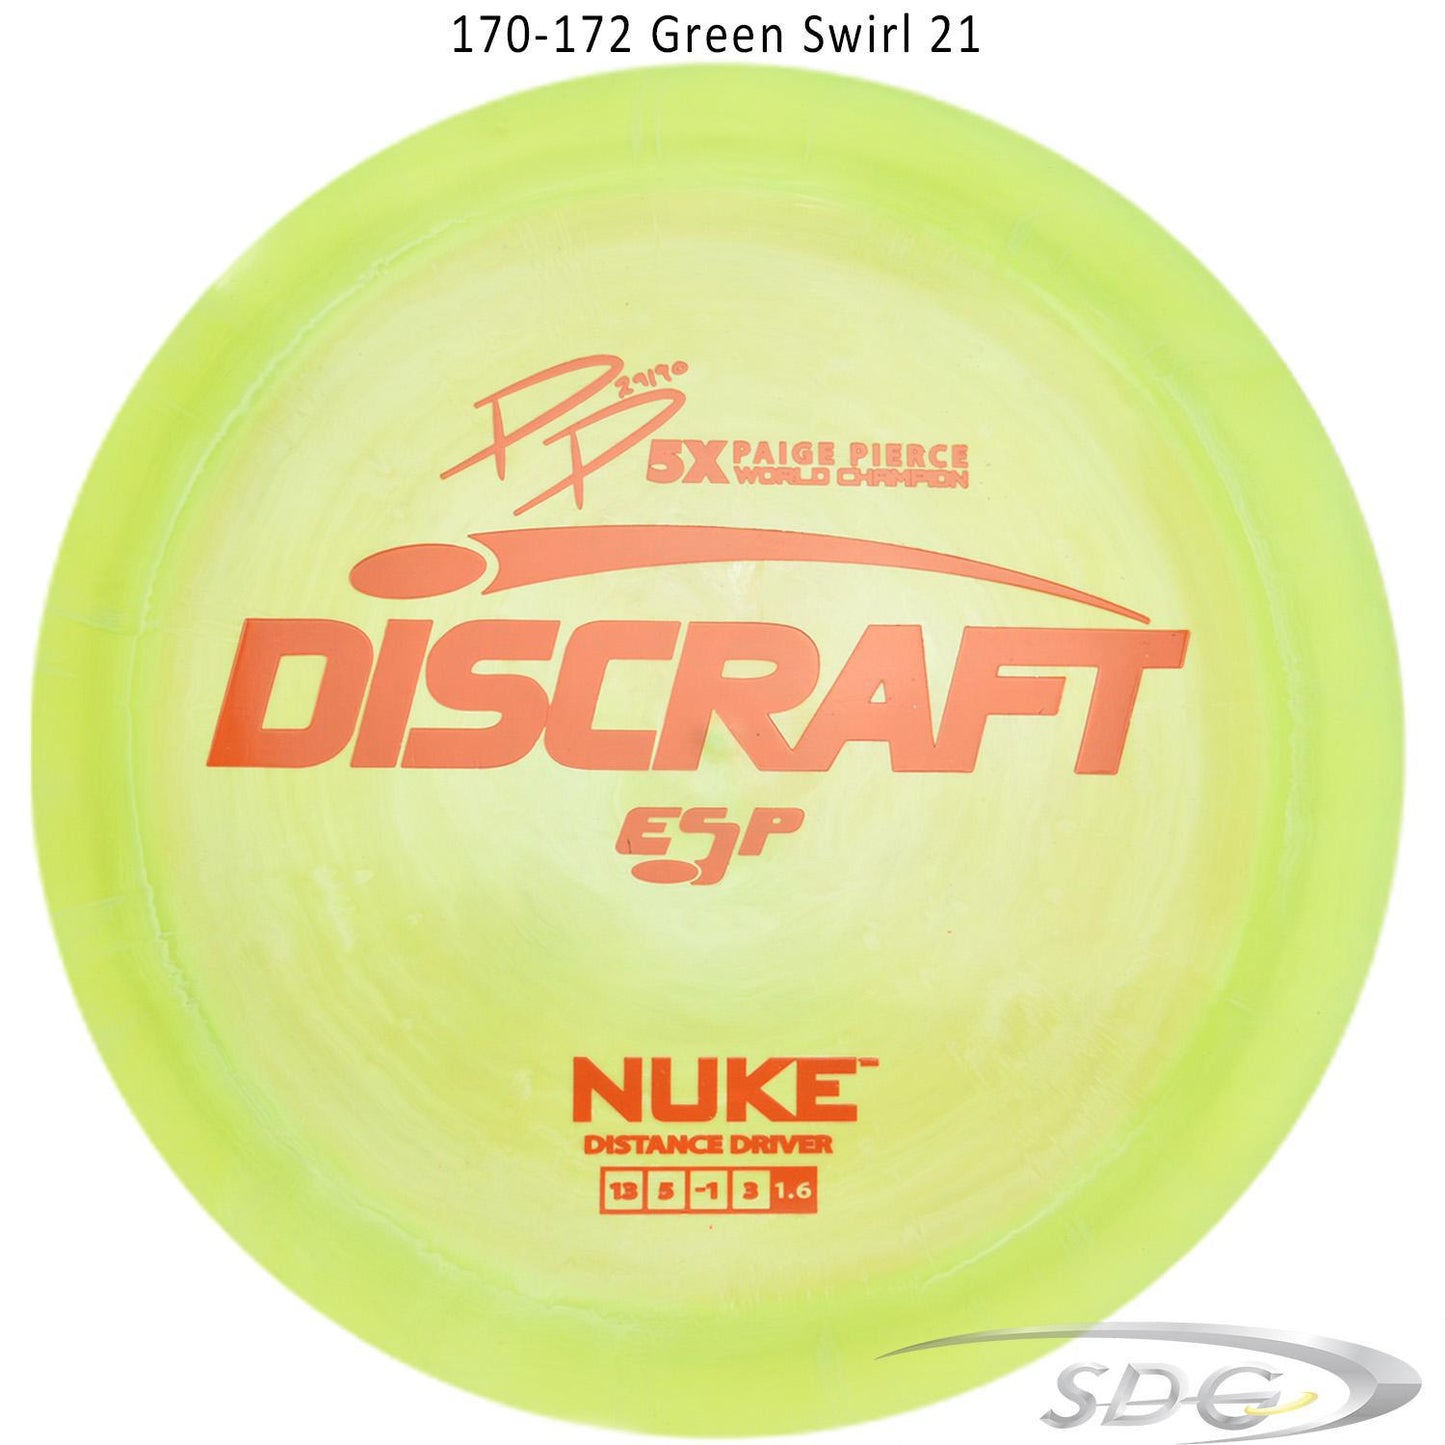 discraft-esp-nuke-paige-pierce-signature-disc-golf-distance-driver 170-172 Green Swirl 21